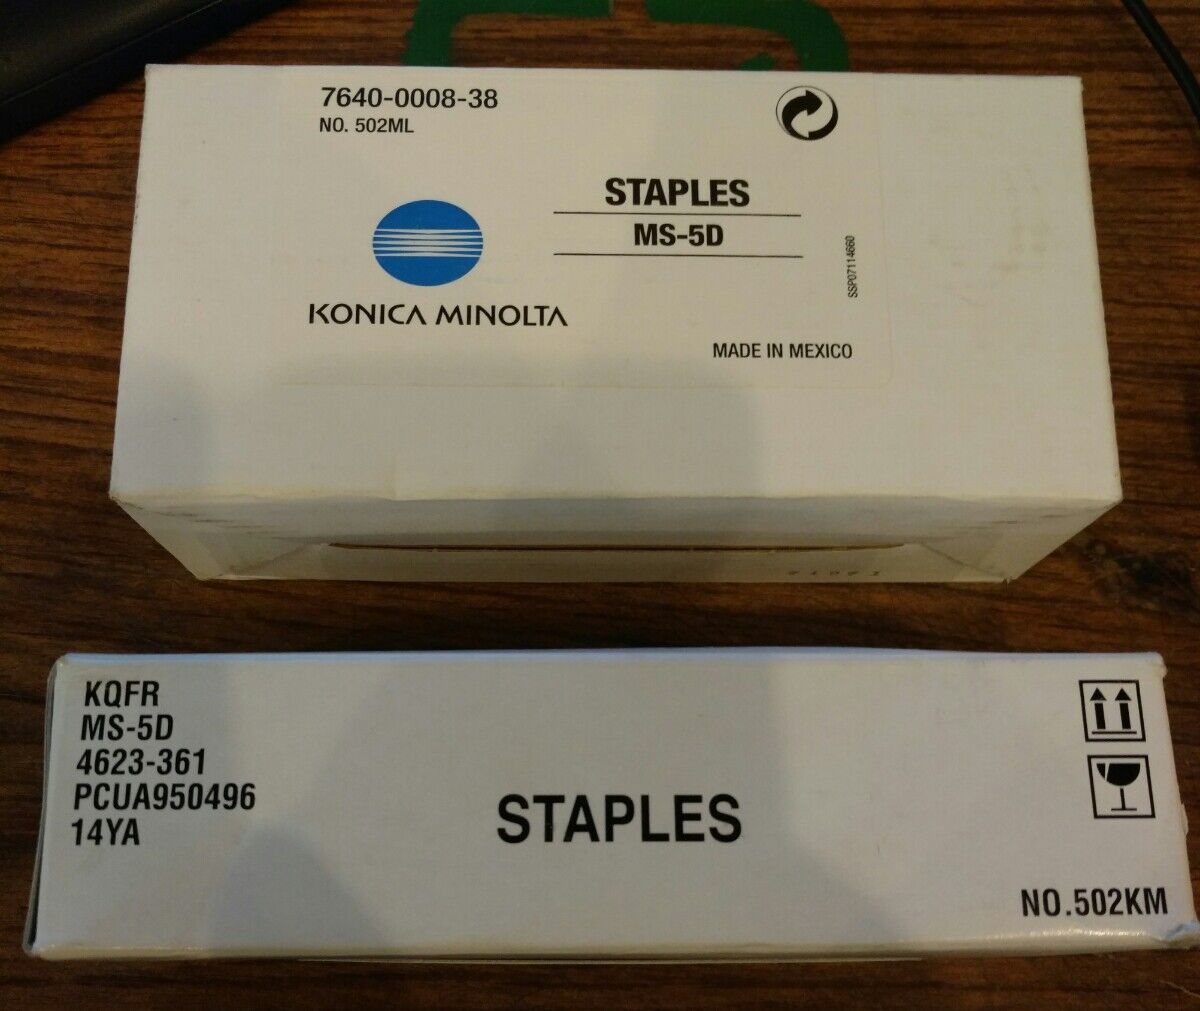 TWO PACKS 0f MS-5D Staples - 7640-0008-38 Konica Minolta FAST SHIPPING #N5